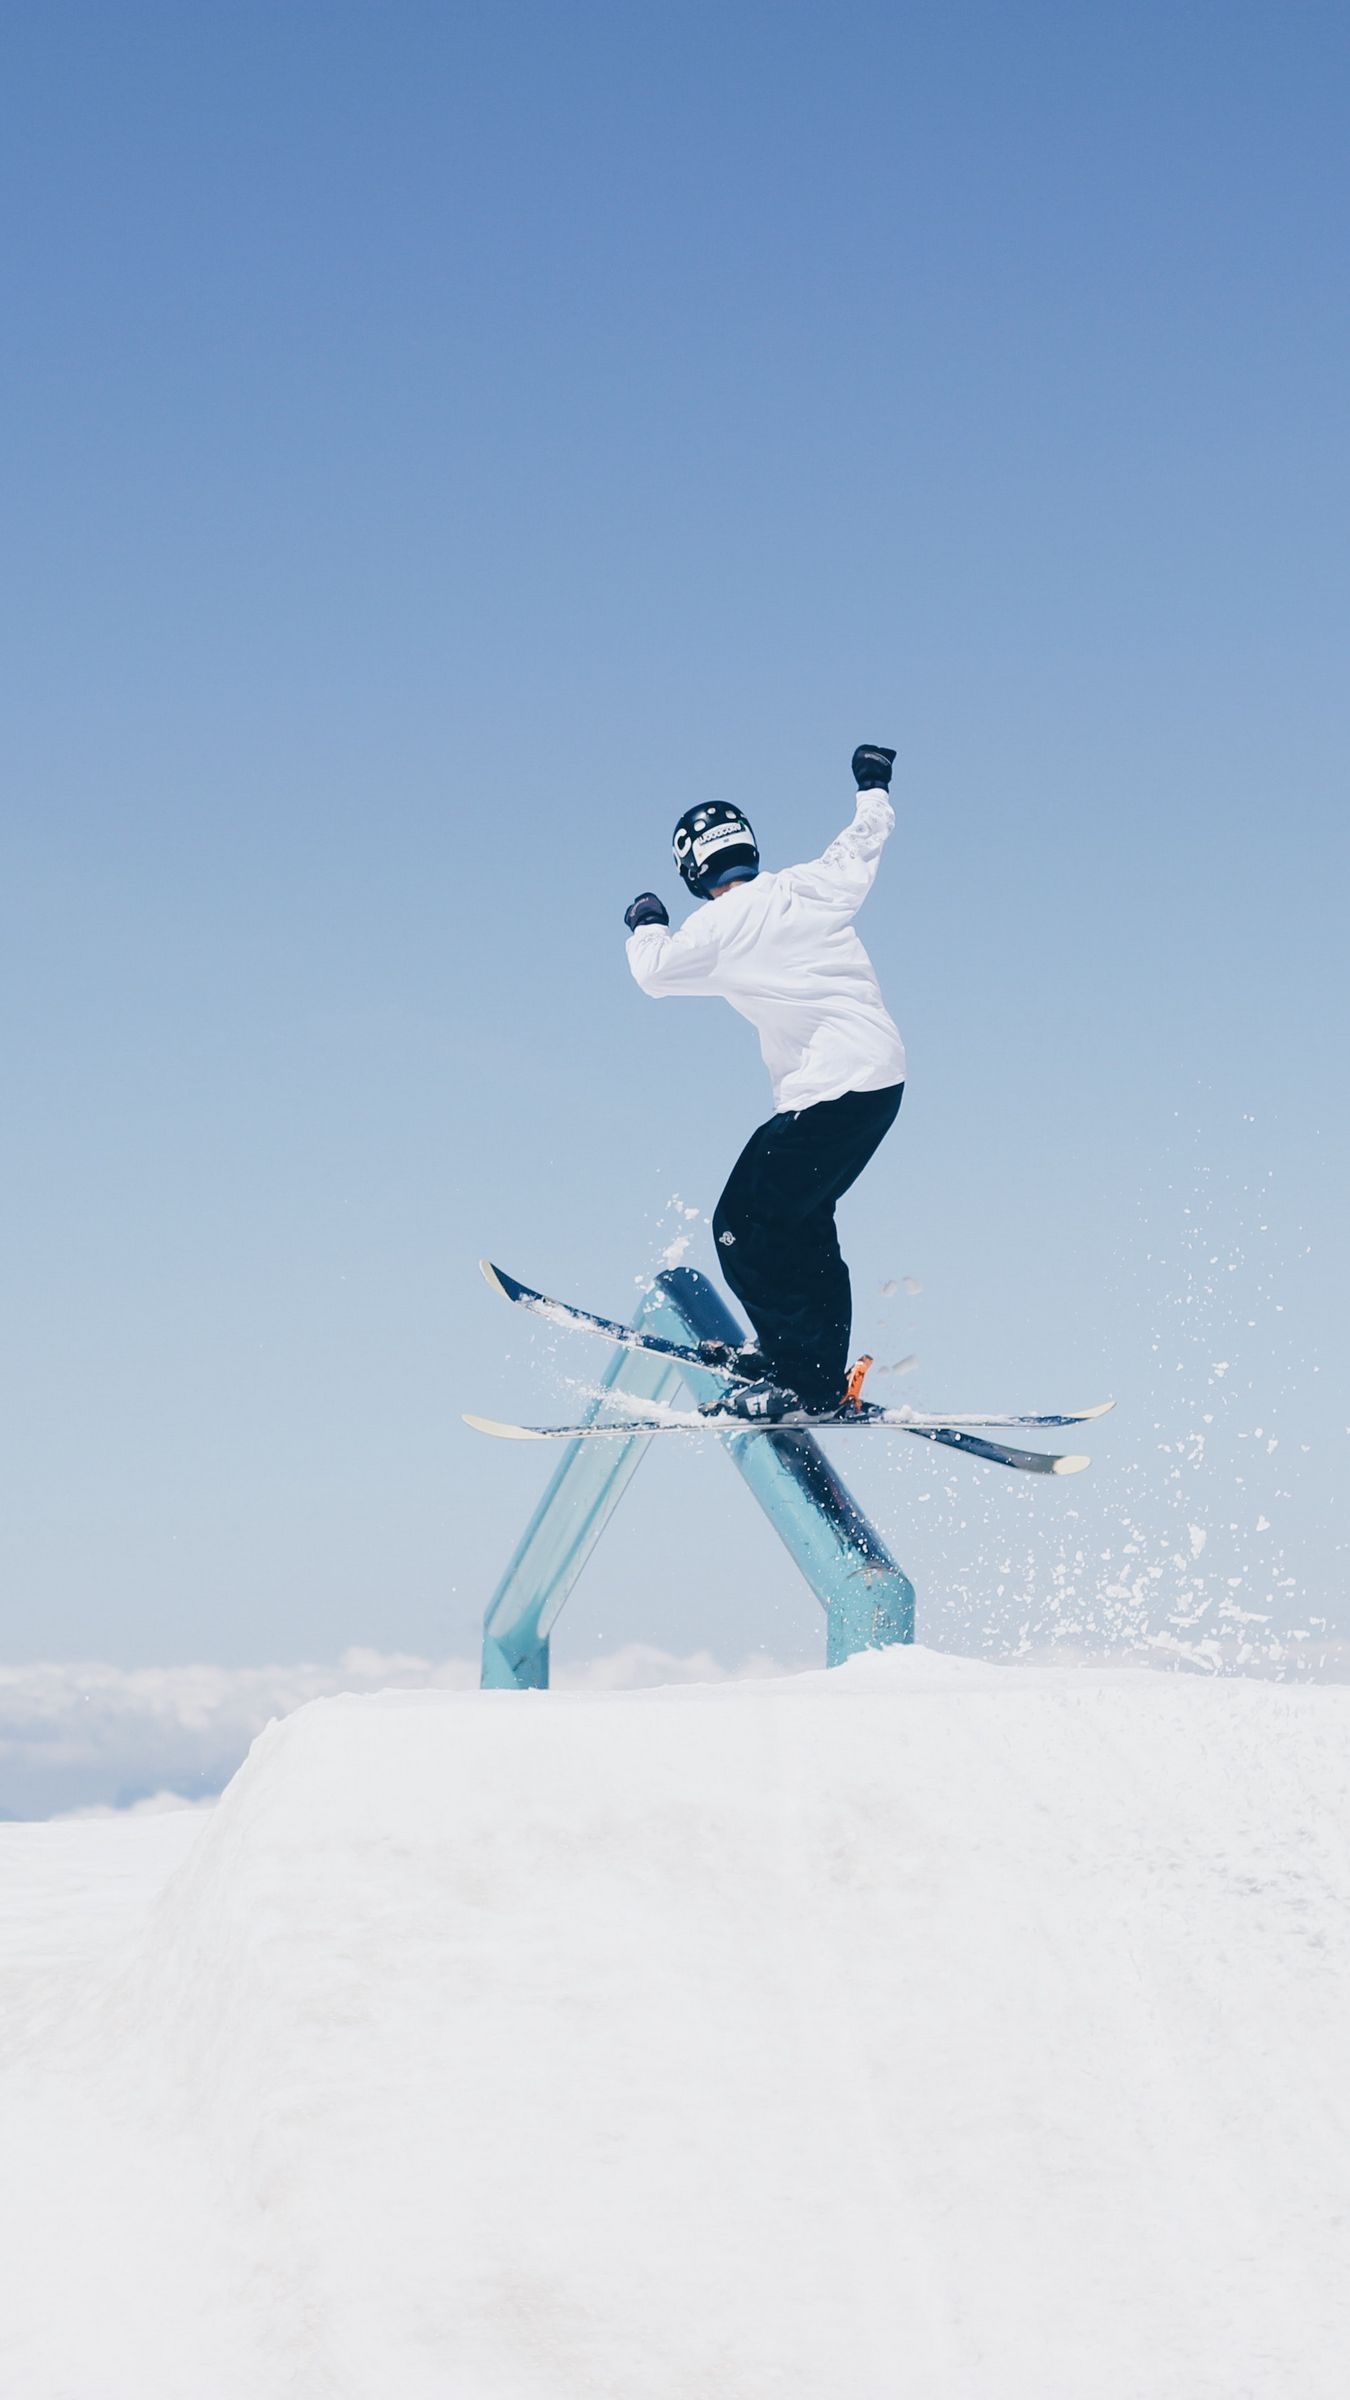 Skiing: Skiing tricks, Ski jumping, Snow, Extreme sports, Downhill, Slalom, Freestyle. 1350x2400 HD Wallpaper.